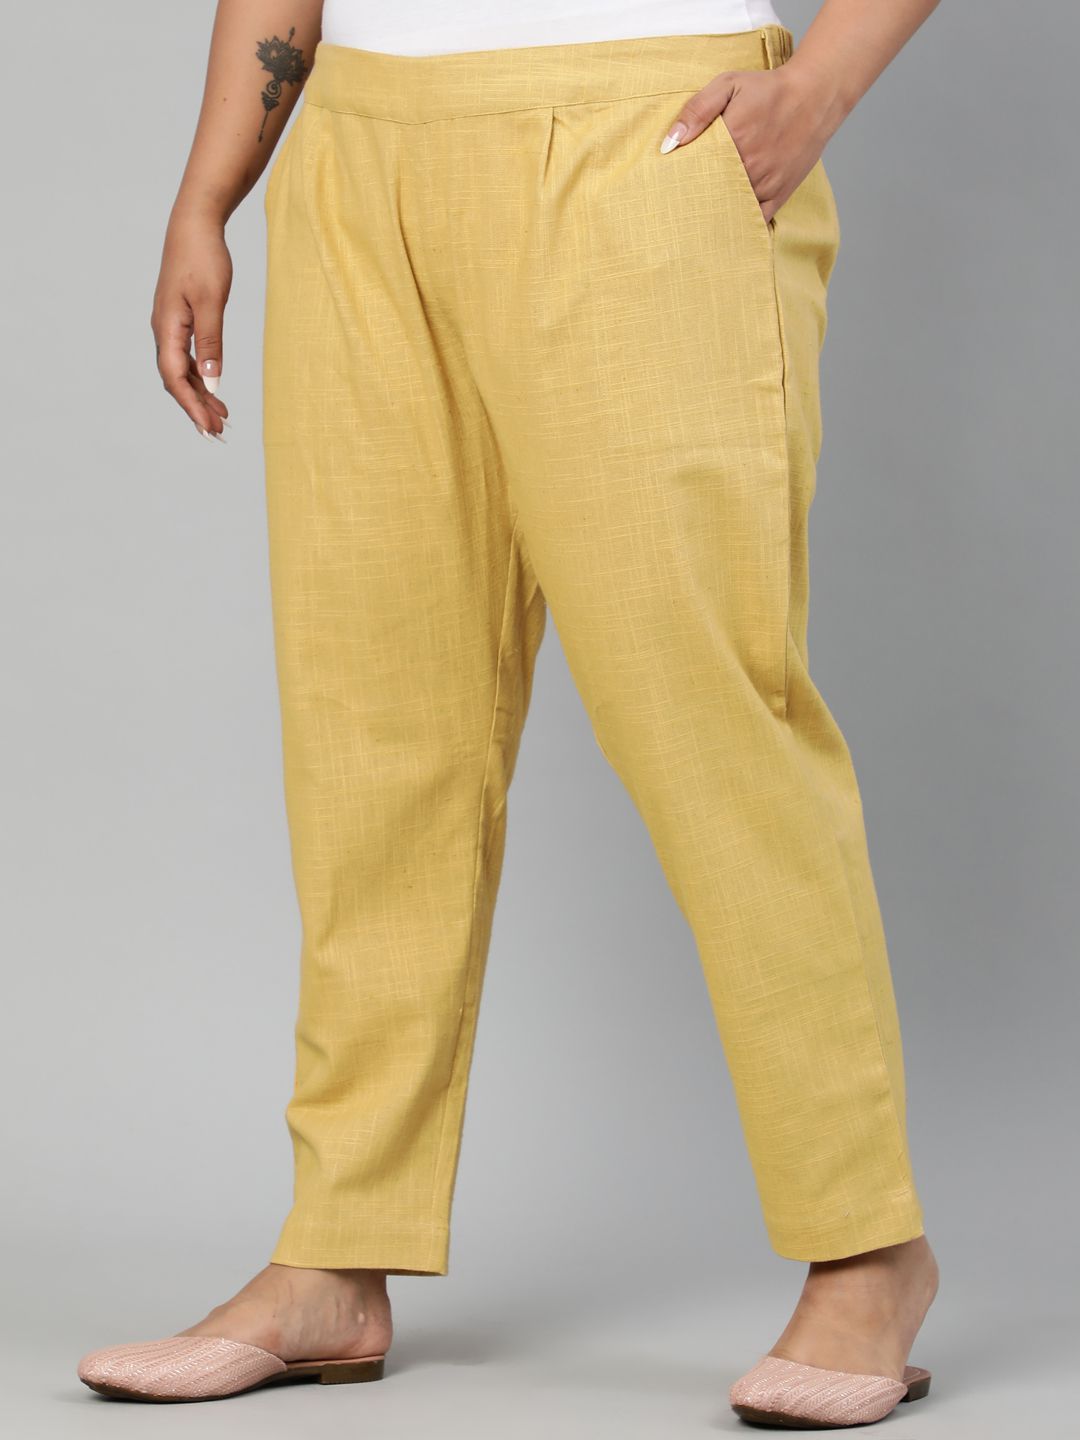 Shop ethnic pants for women